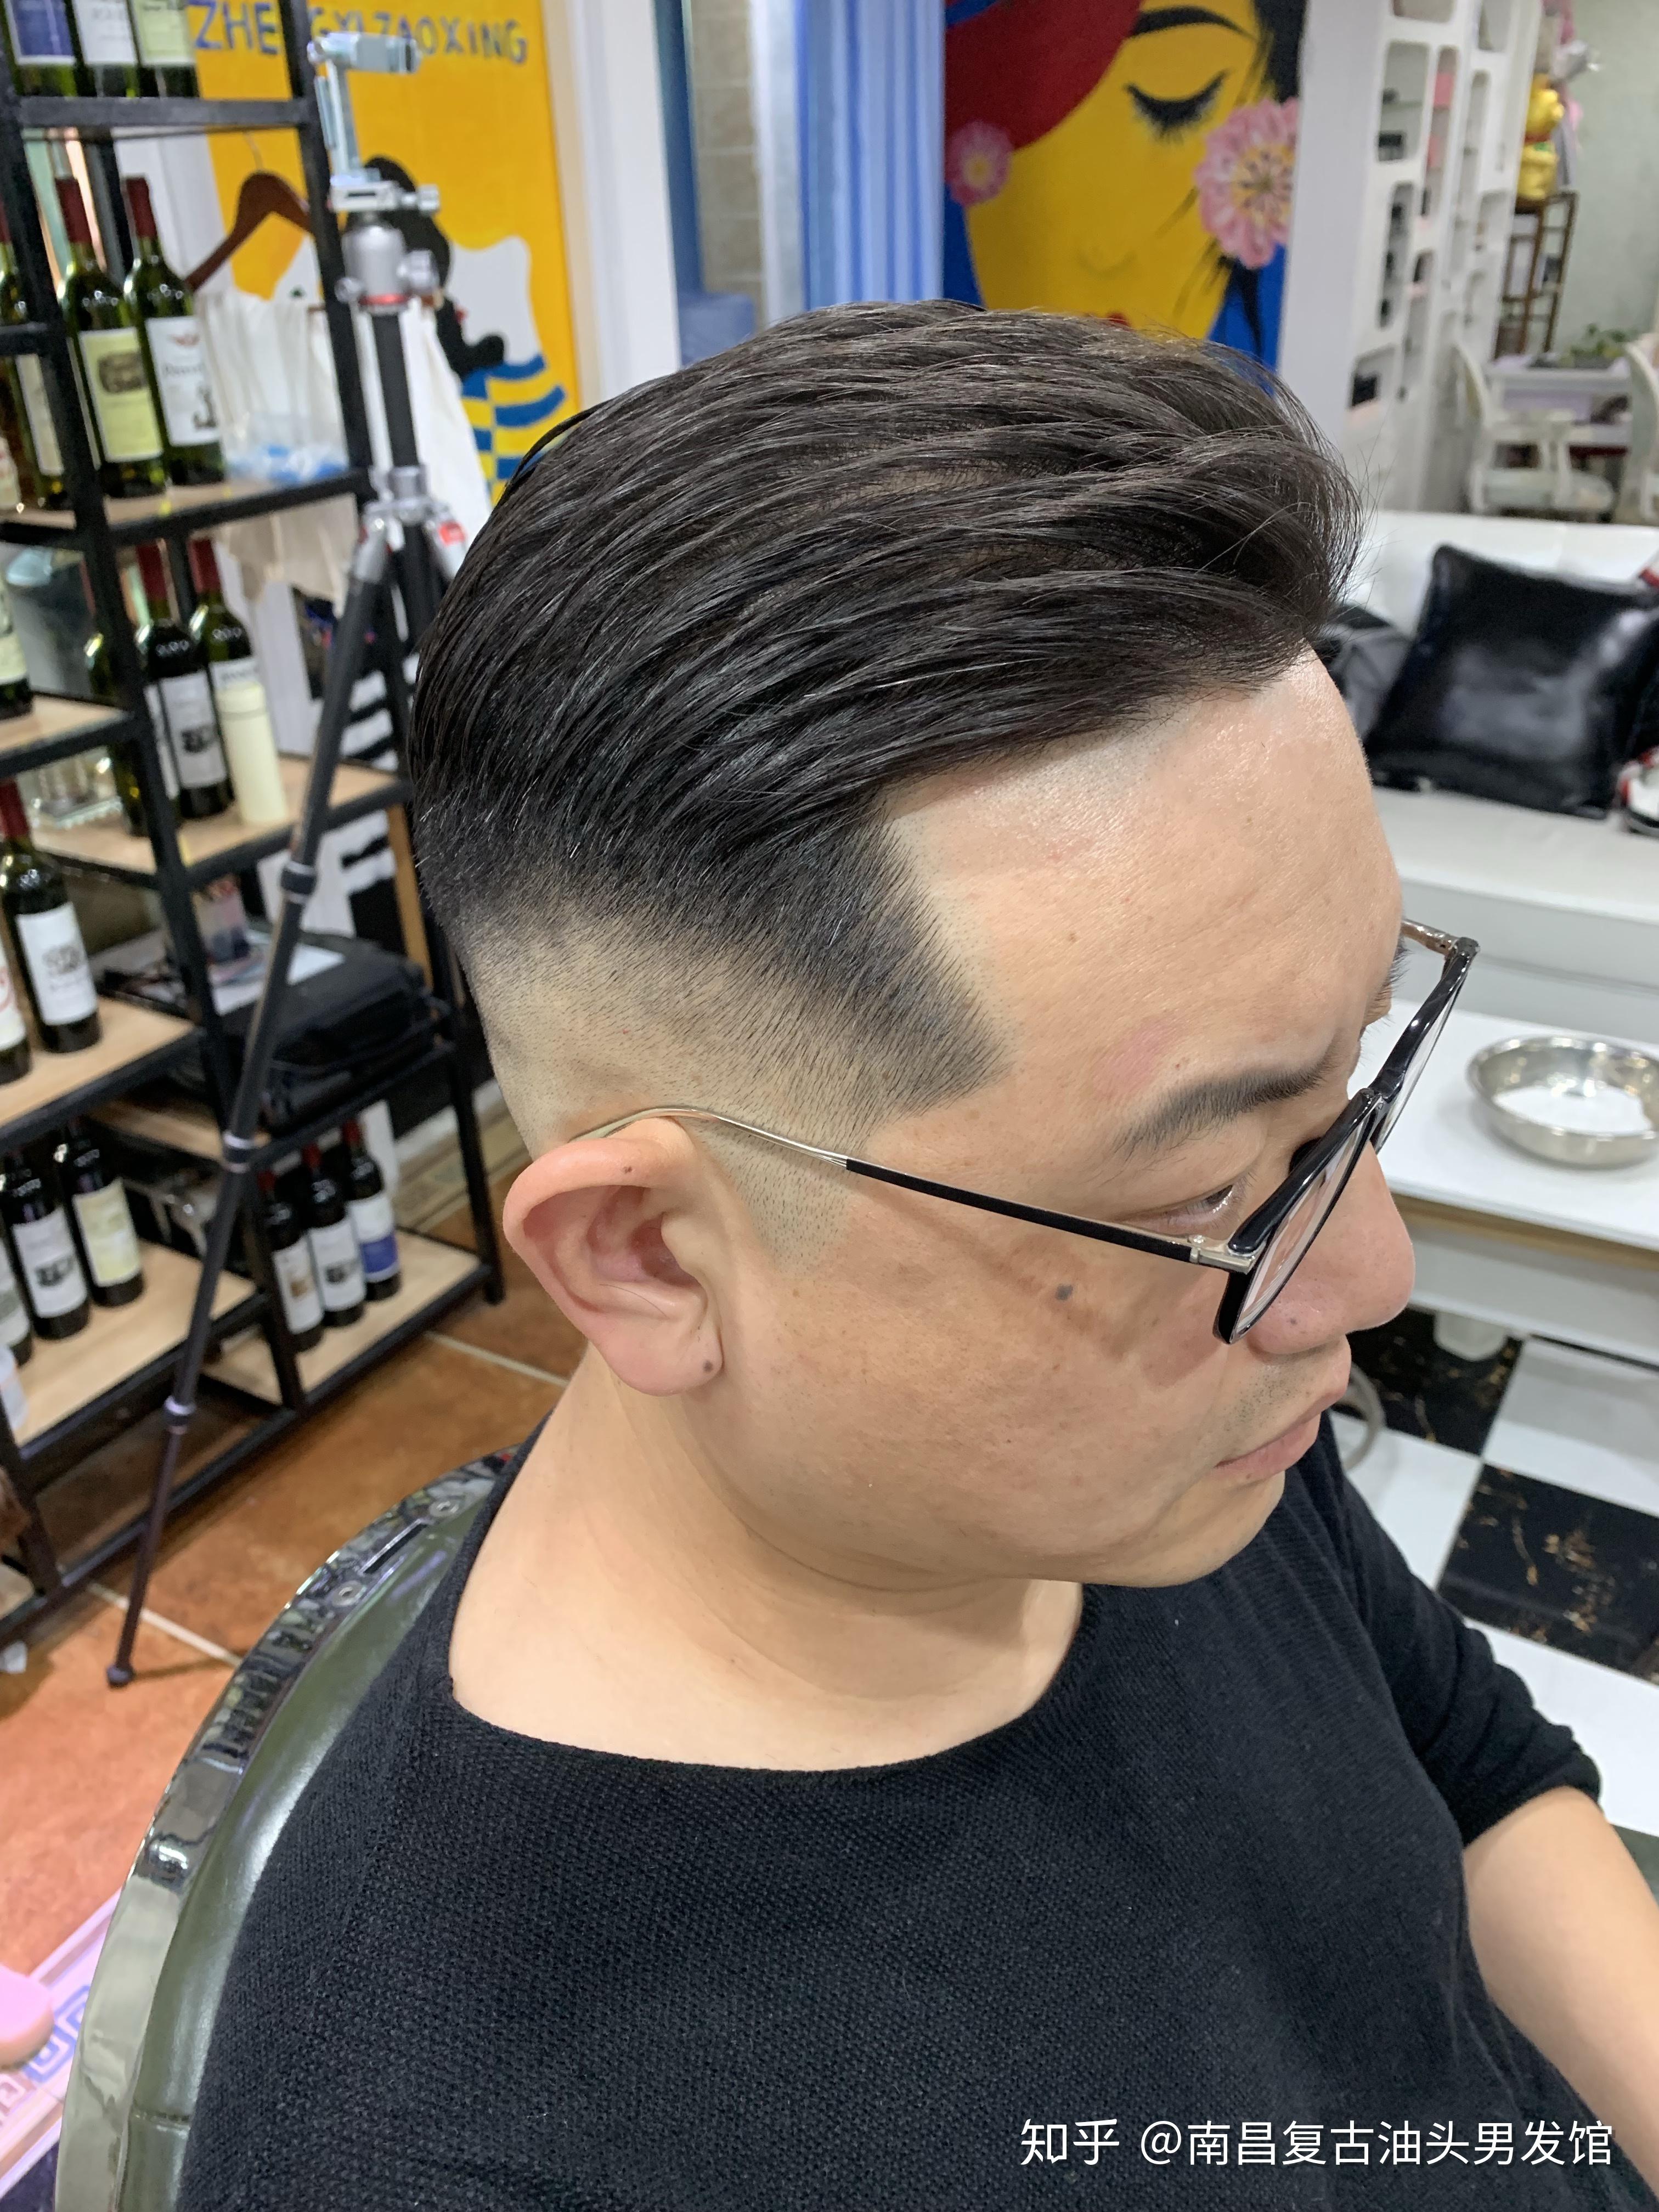 BarberShop不只是一个男士油头理发店？ - 知乎